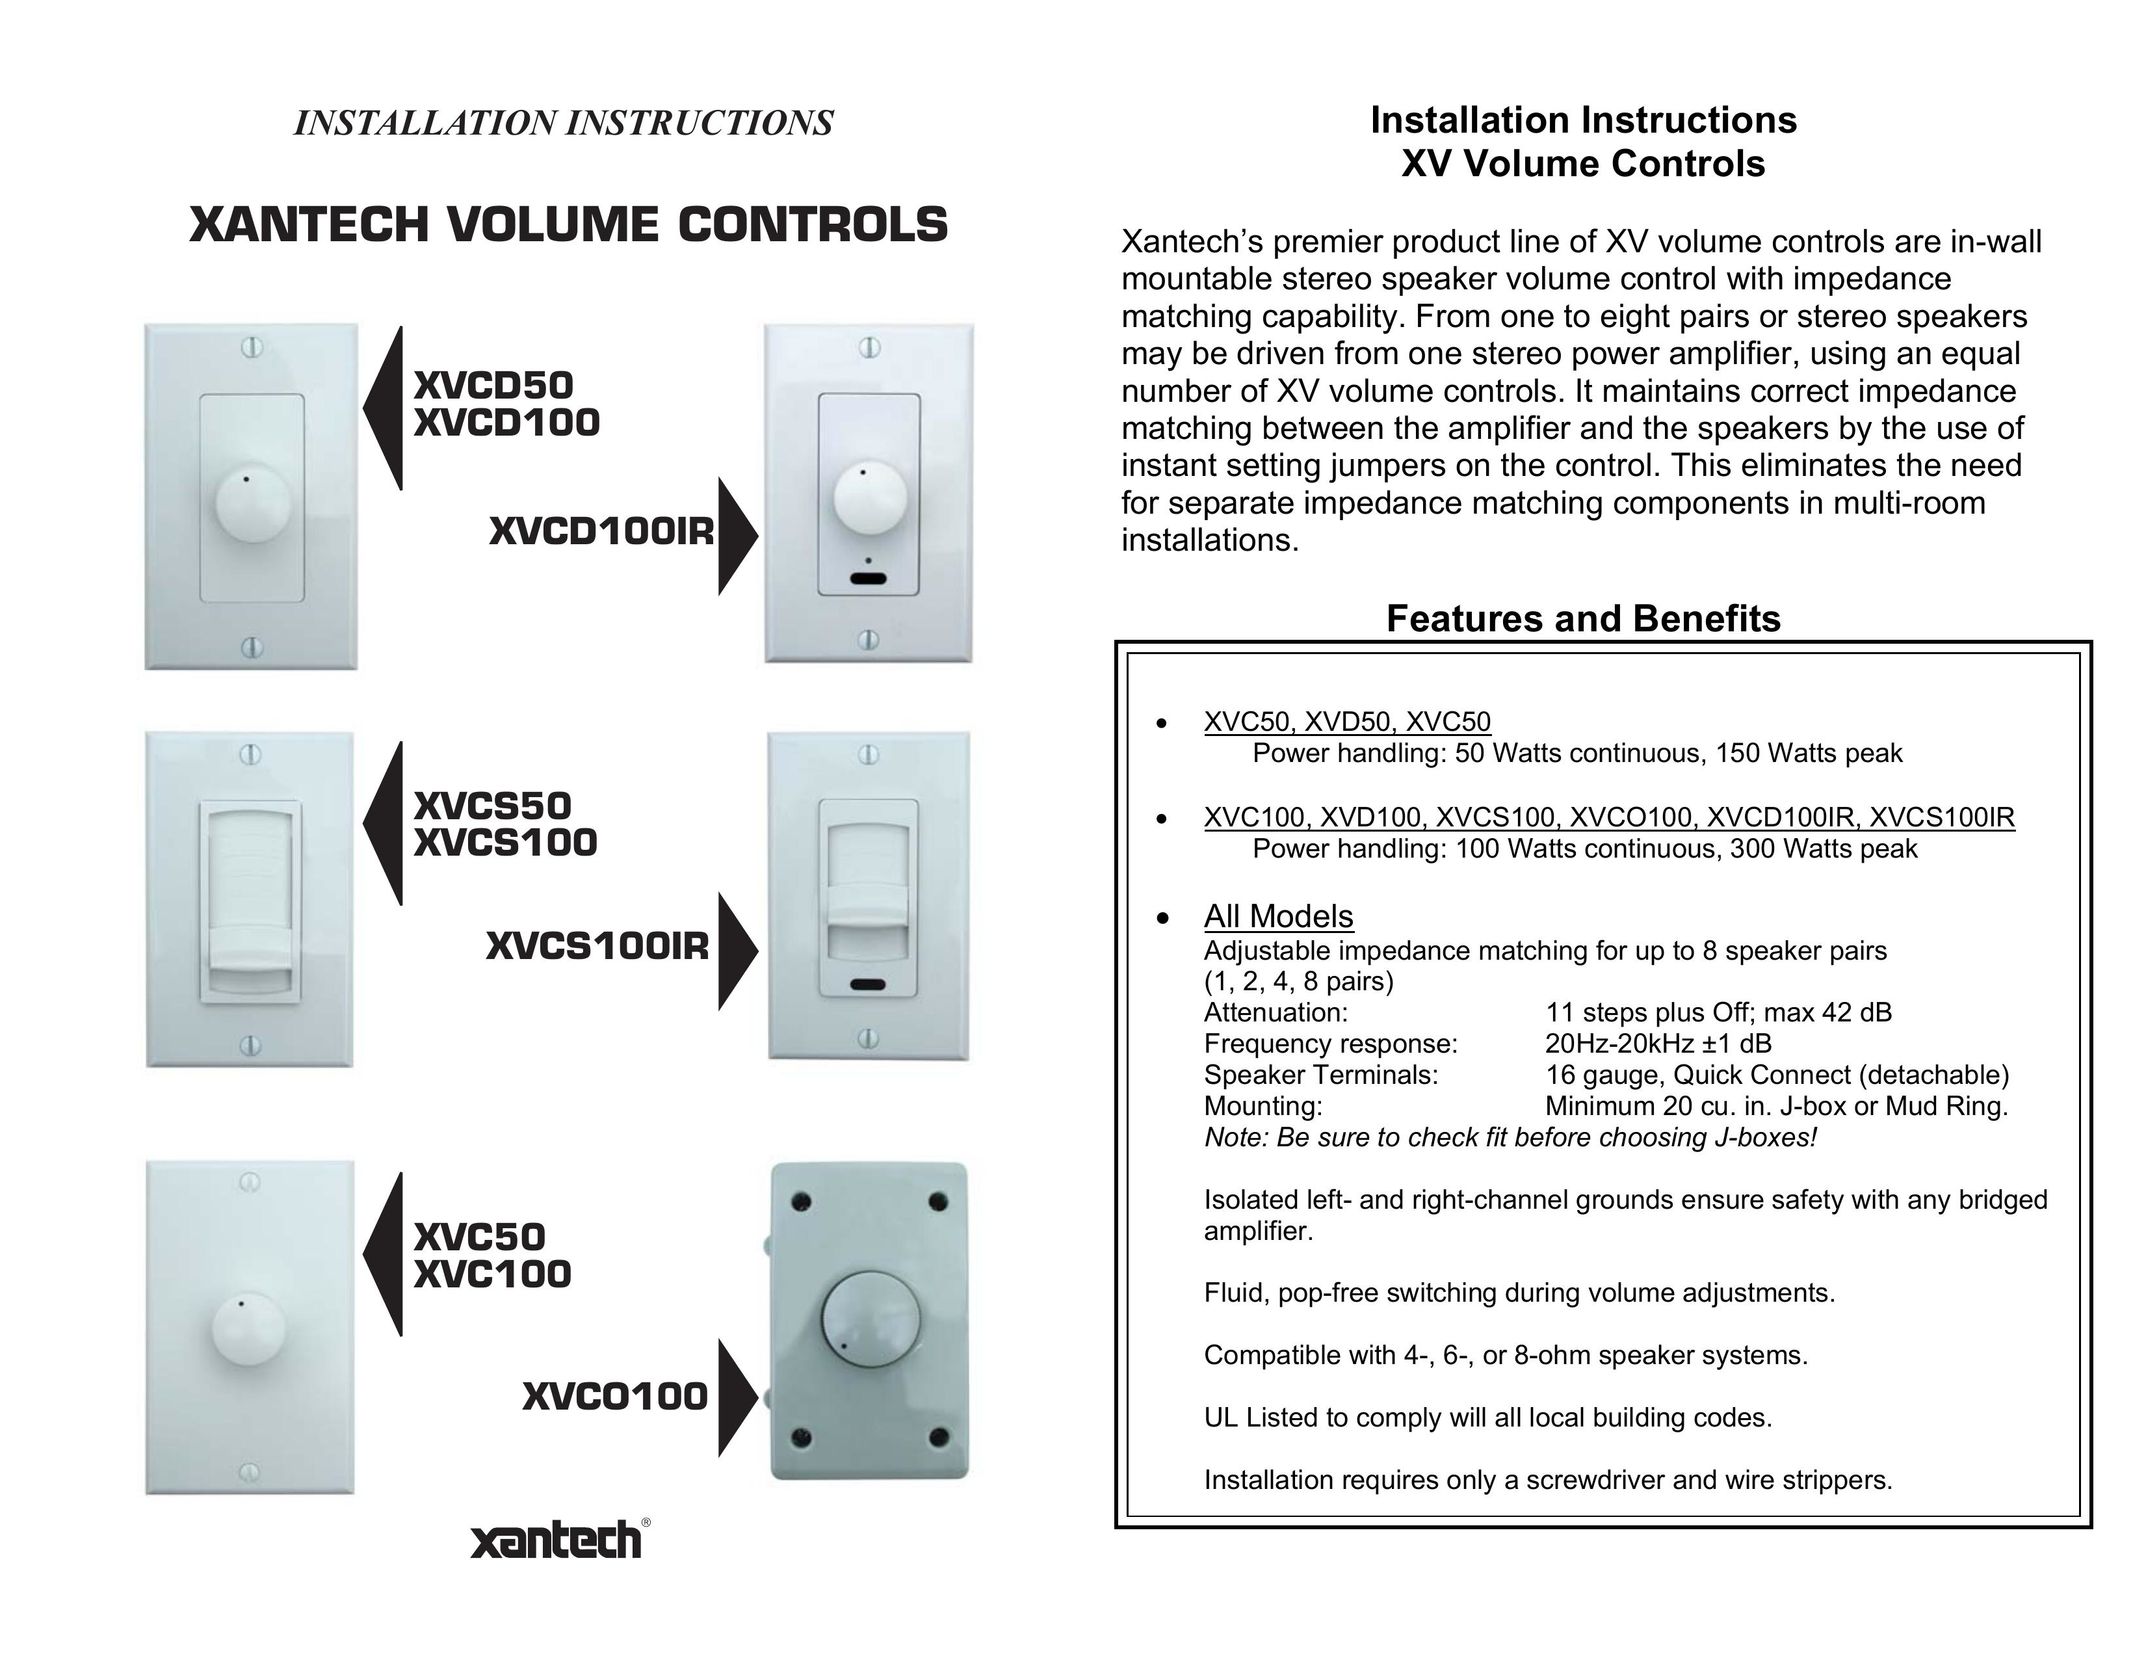 Xantech XVCD100 Switch User Manual